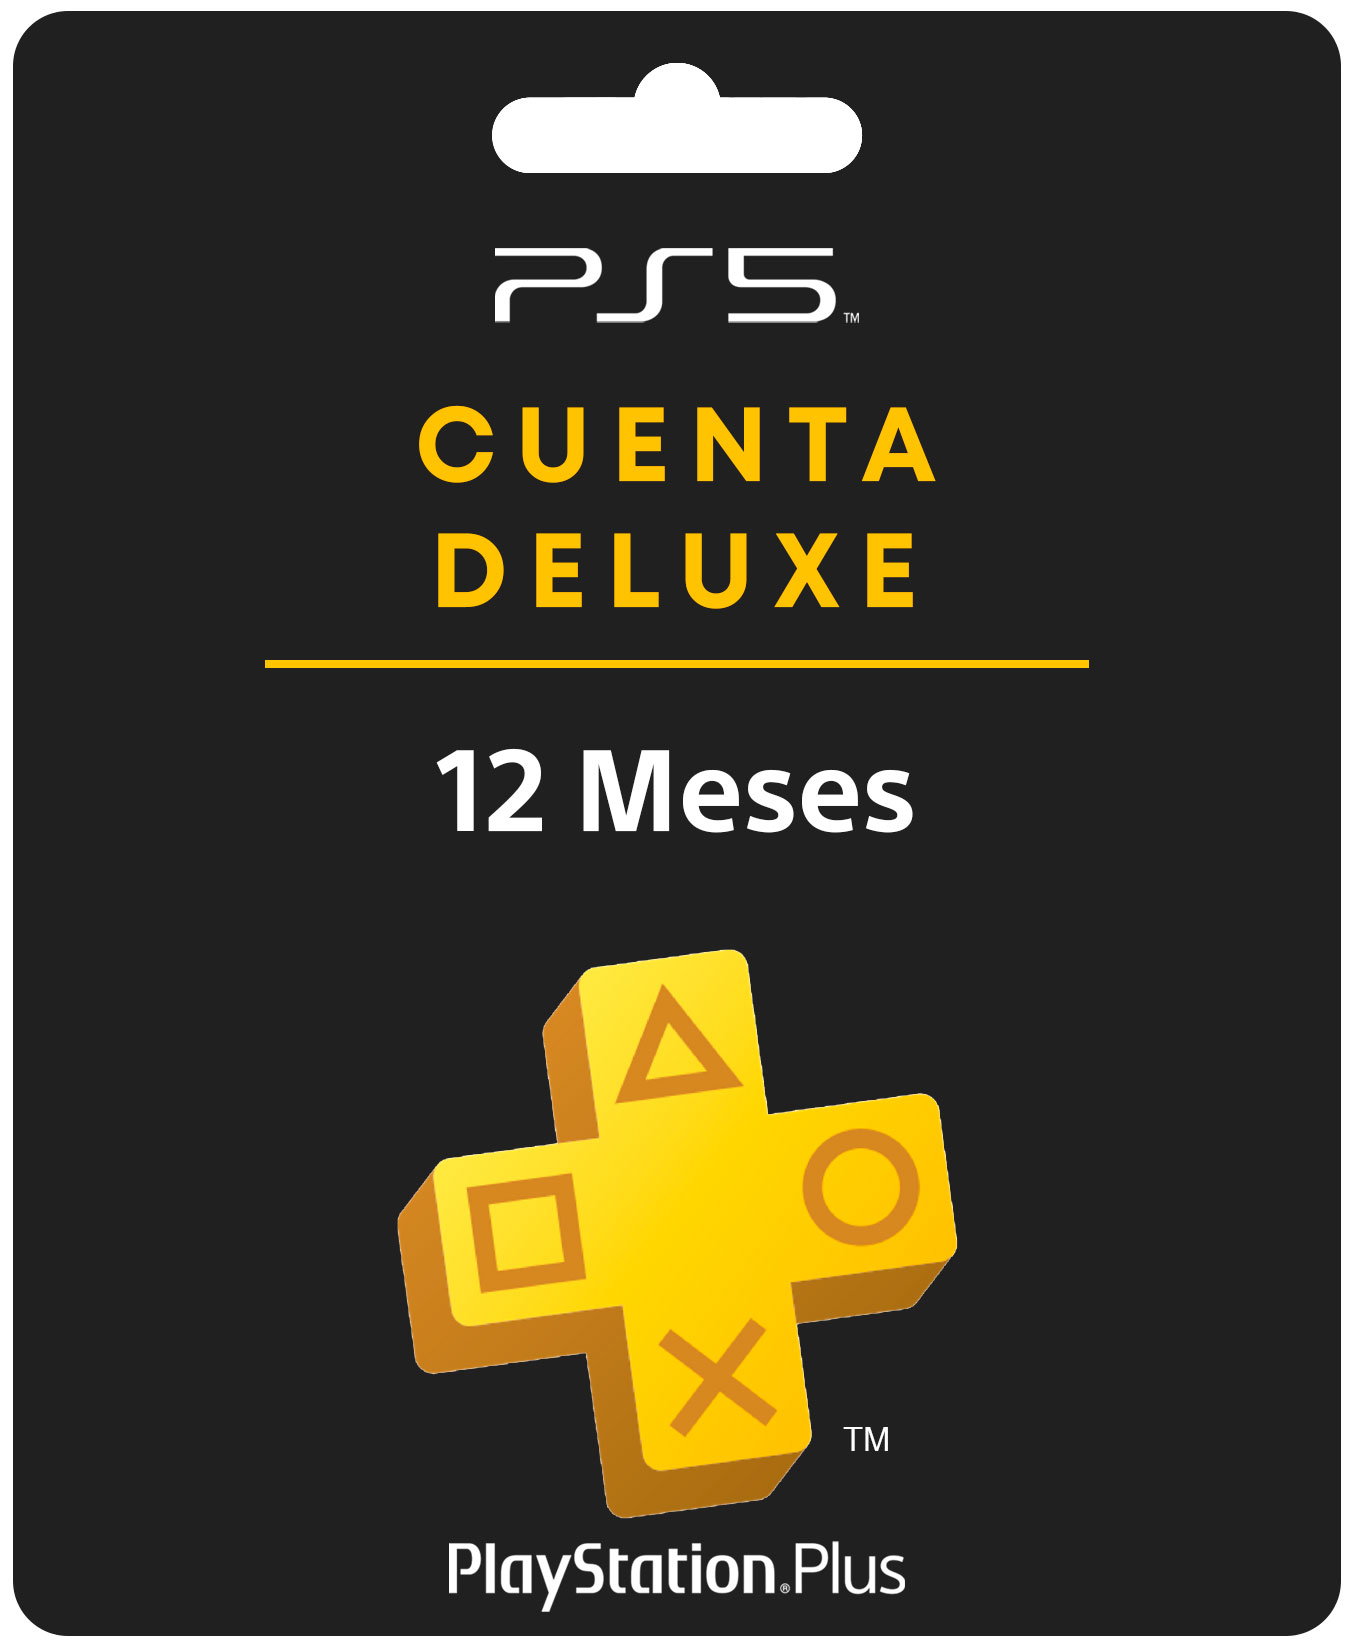 Playstation Plus Membresia 12 Meses Para cuenta PSN CHILE oferta $ 31.490  Entrega codigo de inmediato Comprar aca ….